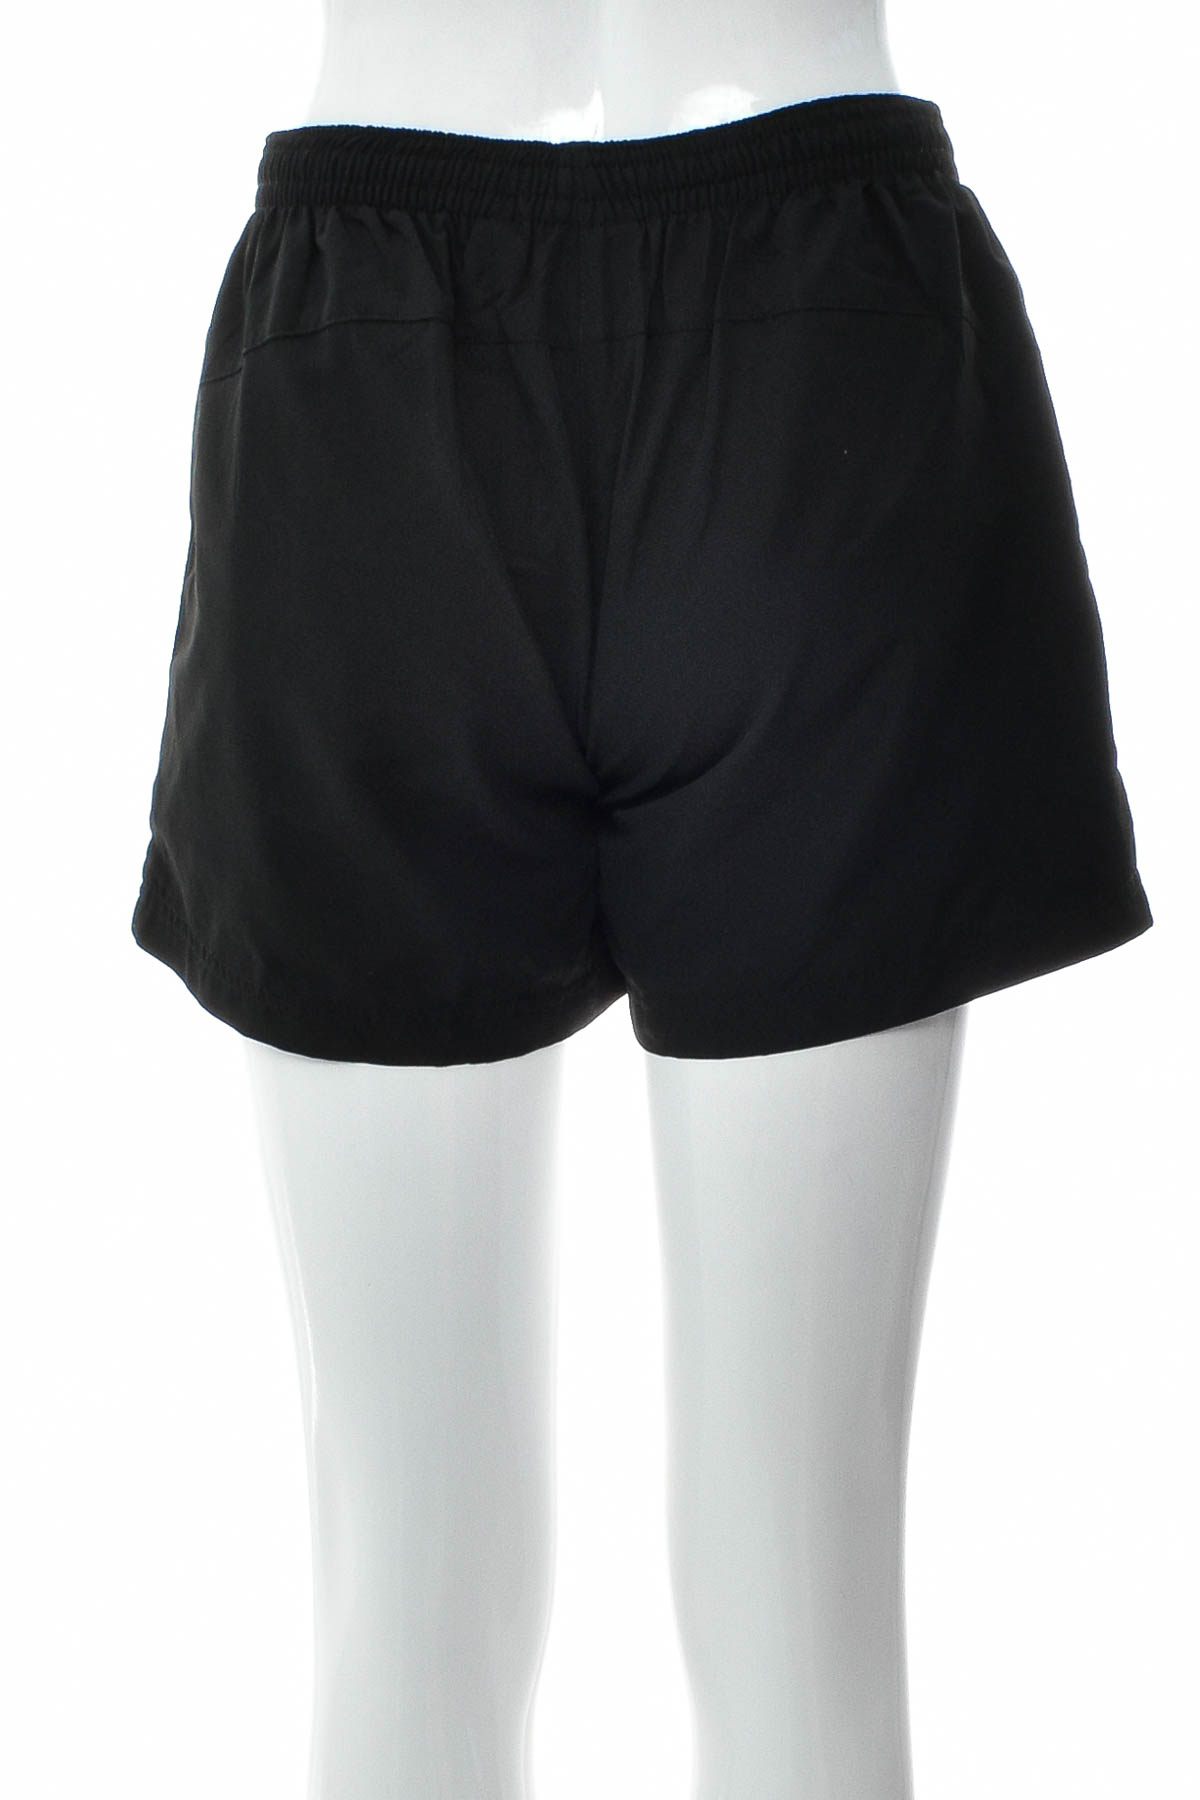 Women's shorts - CRANE SPORTS - 1